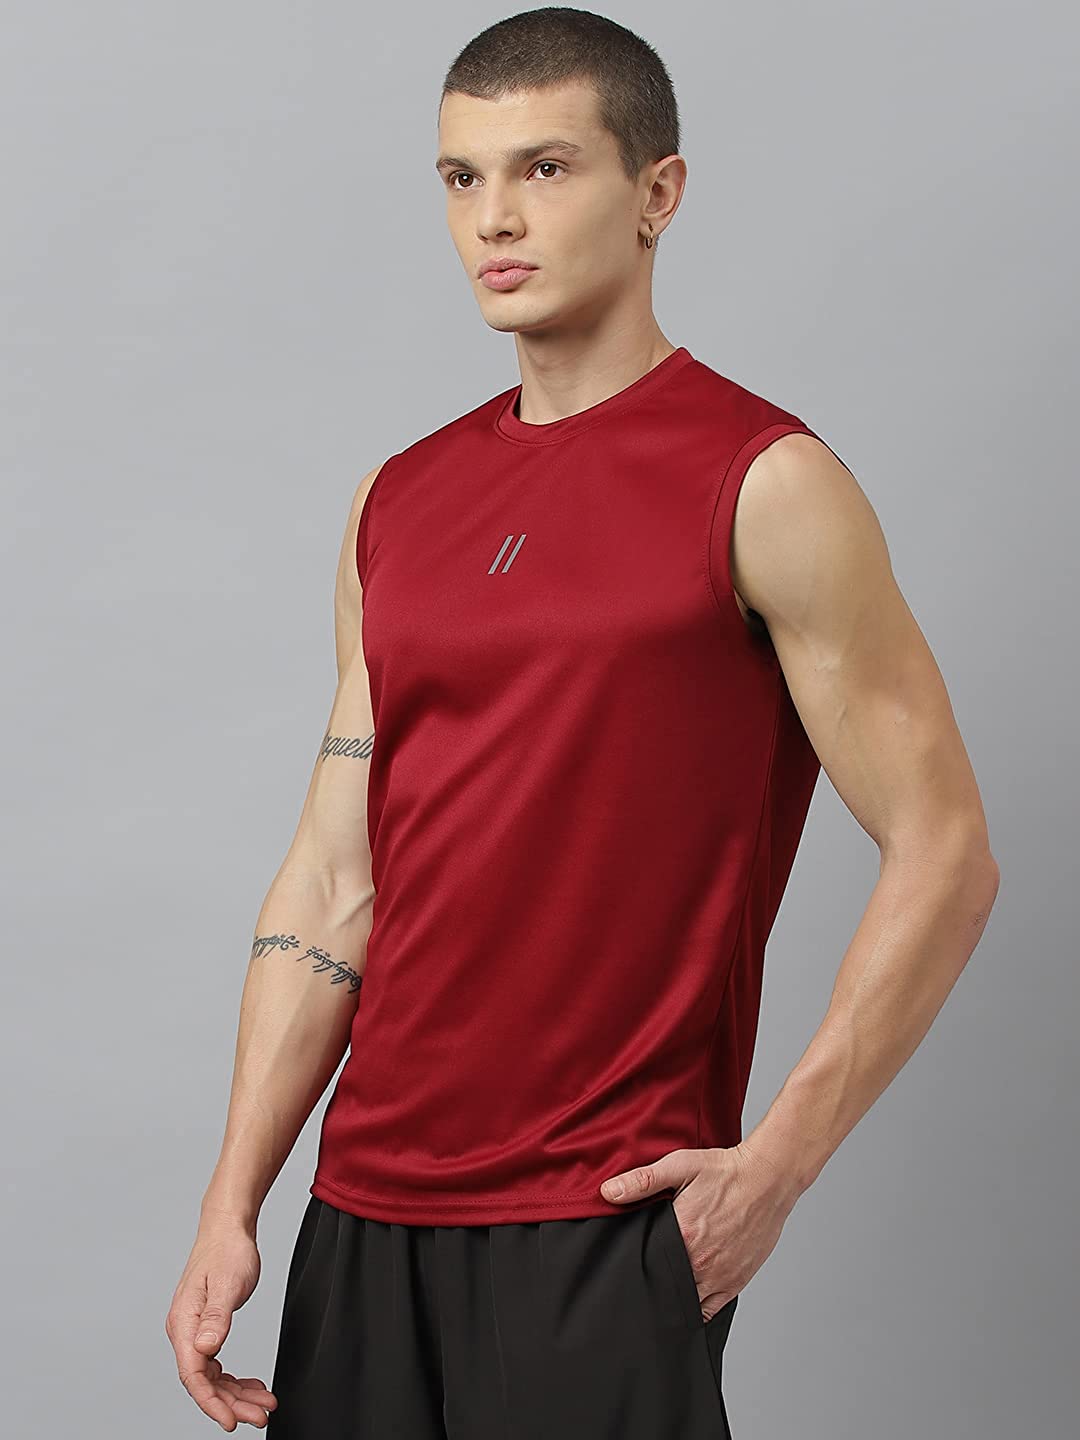 Men’s Slim Fit Polyester Sleeveless T Shirt (combo)(Black/Maroon)